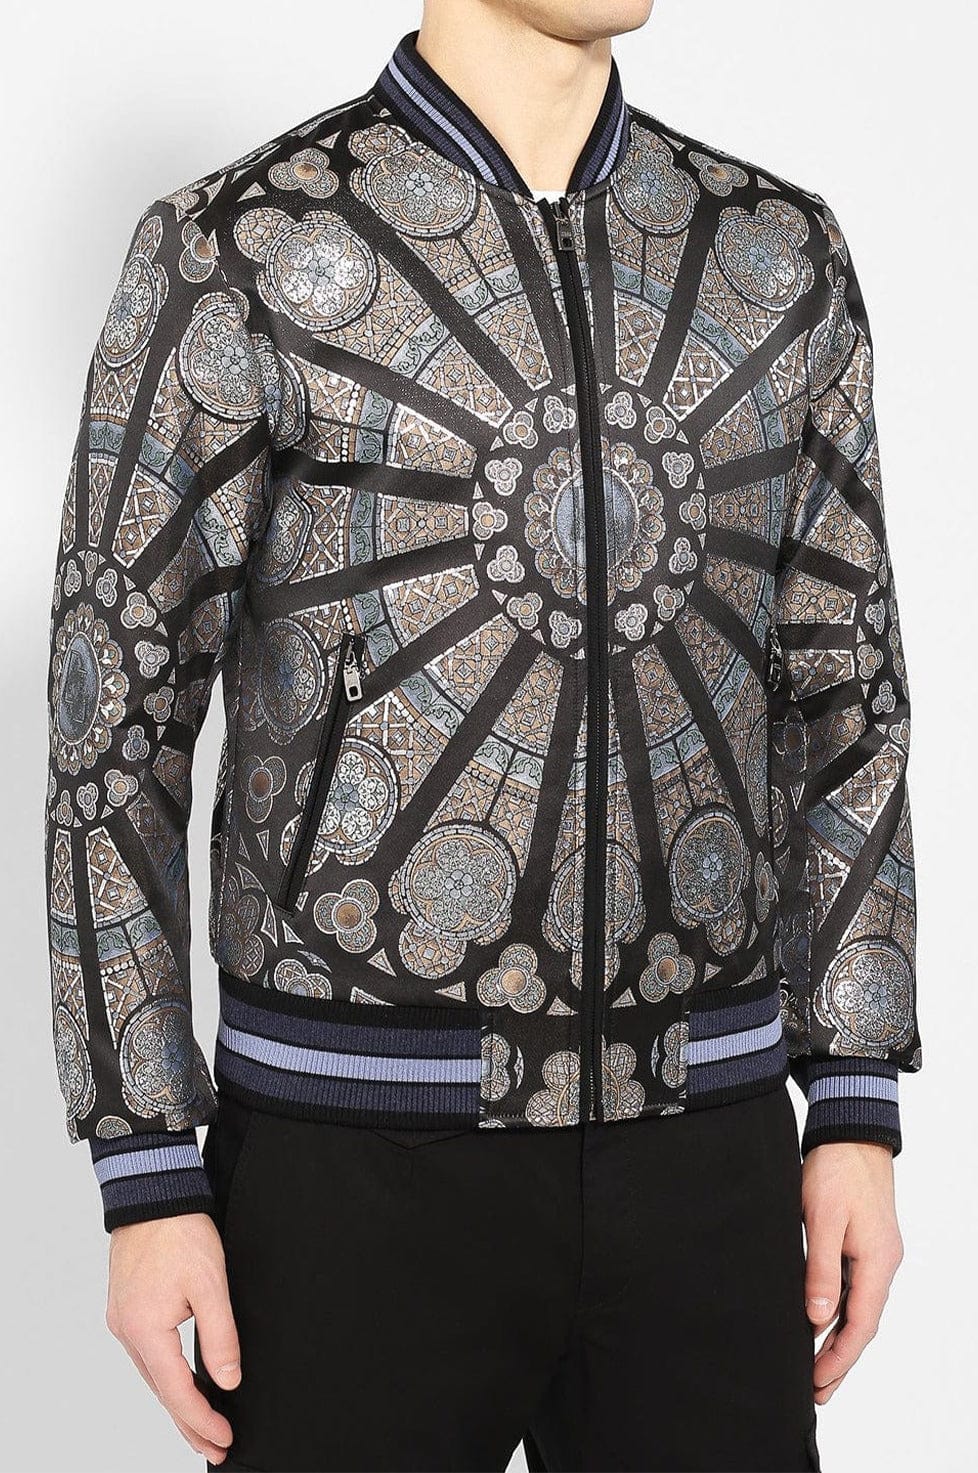 Gucci Logo Print Bomber Jacket in Metallic for Men